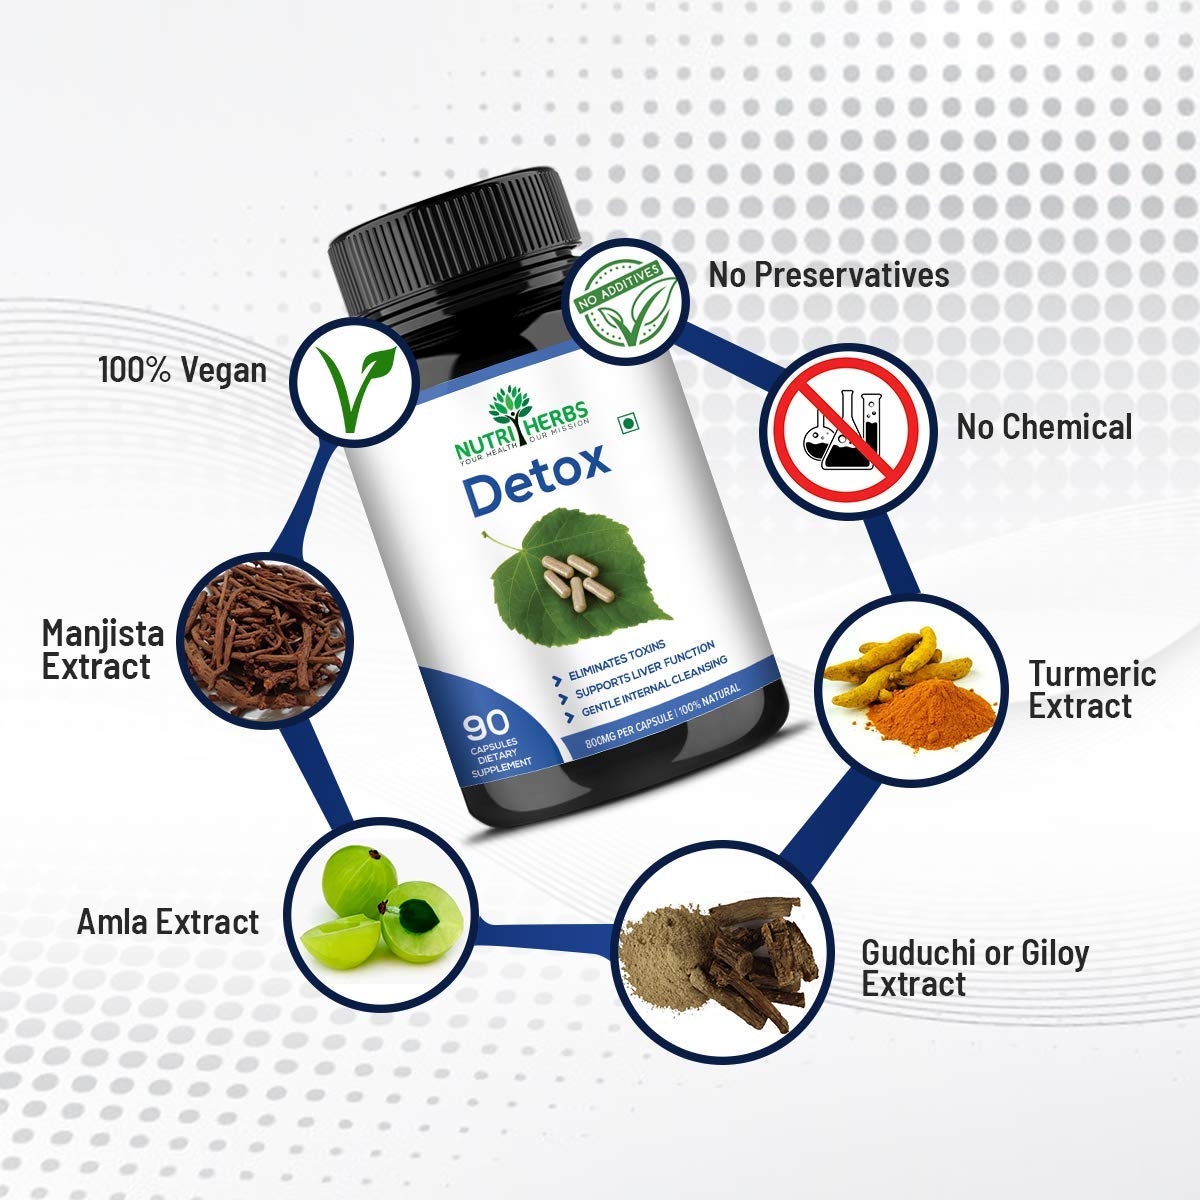 Ifra Nutriherbs Detox(Natural Cleanser & Metabolism Enhancer) 800 Mg 90 Capsules 100% Natural & Pure(Pack of 1)